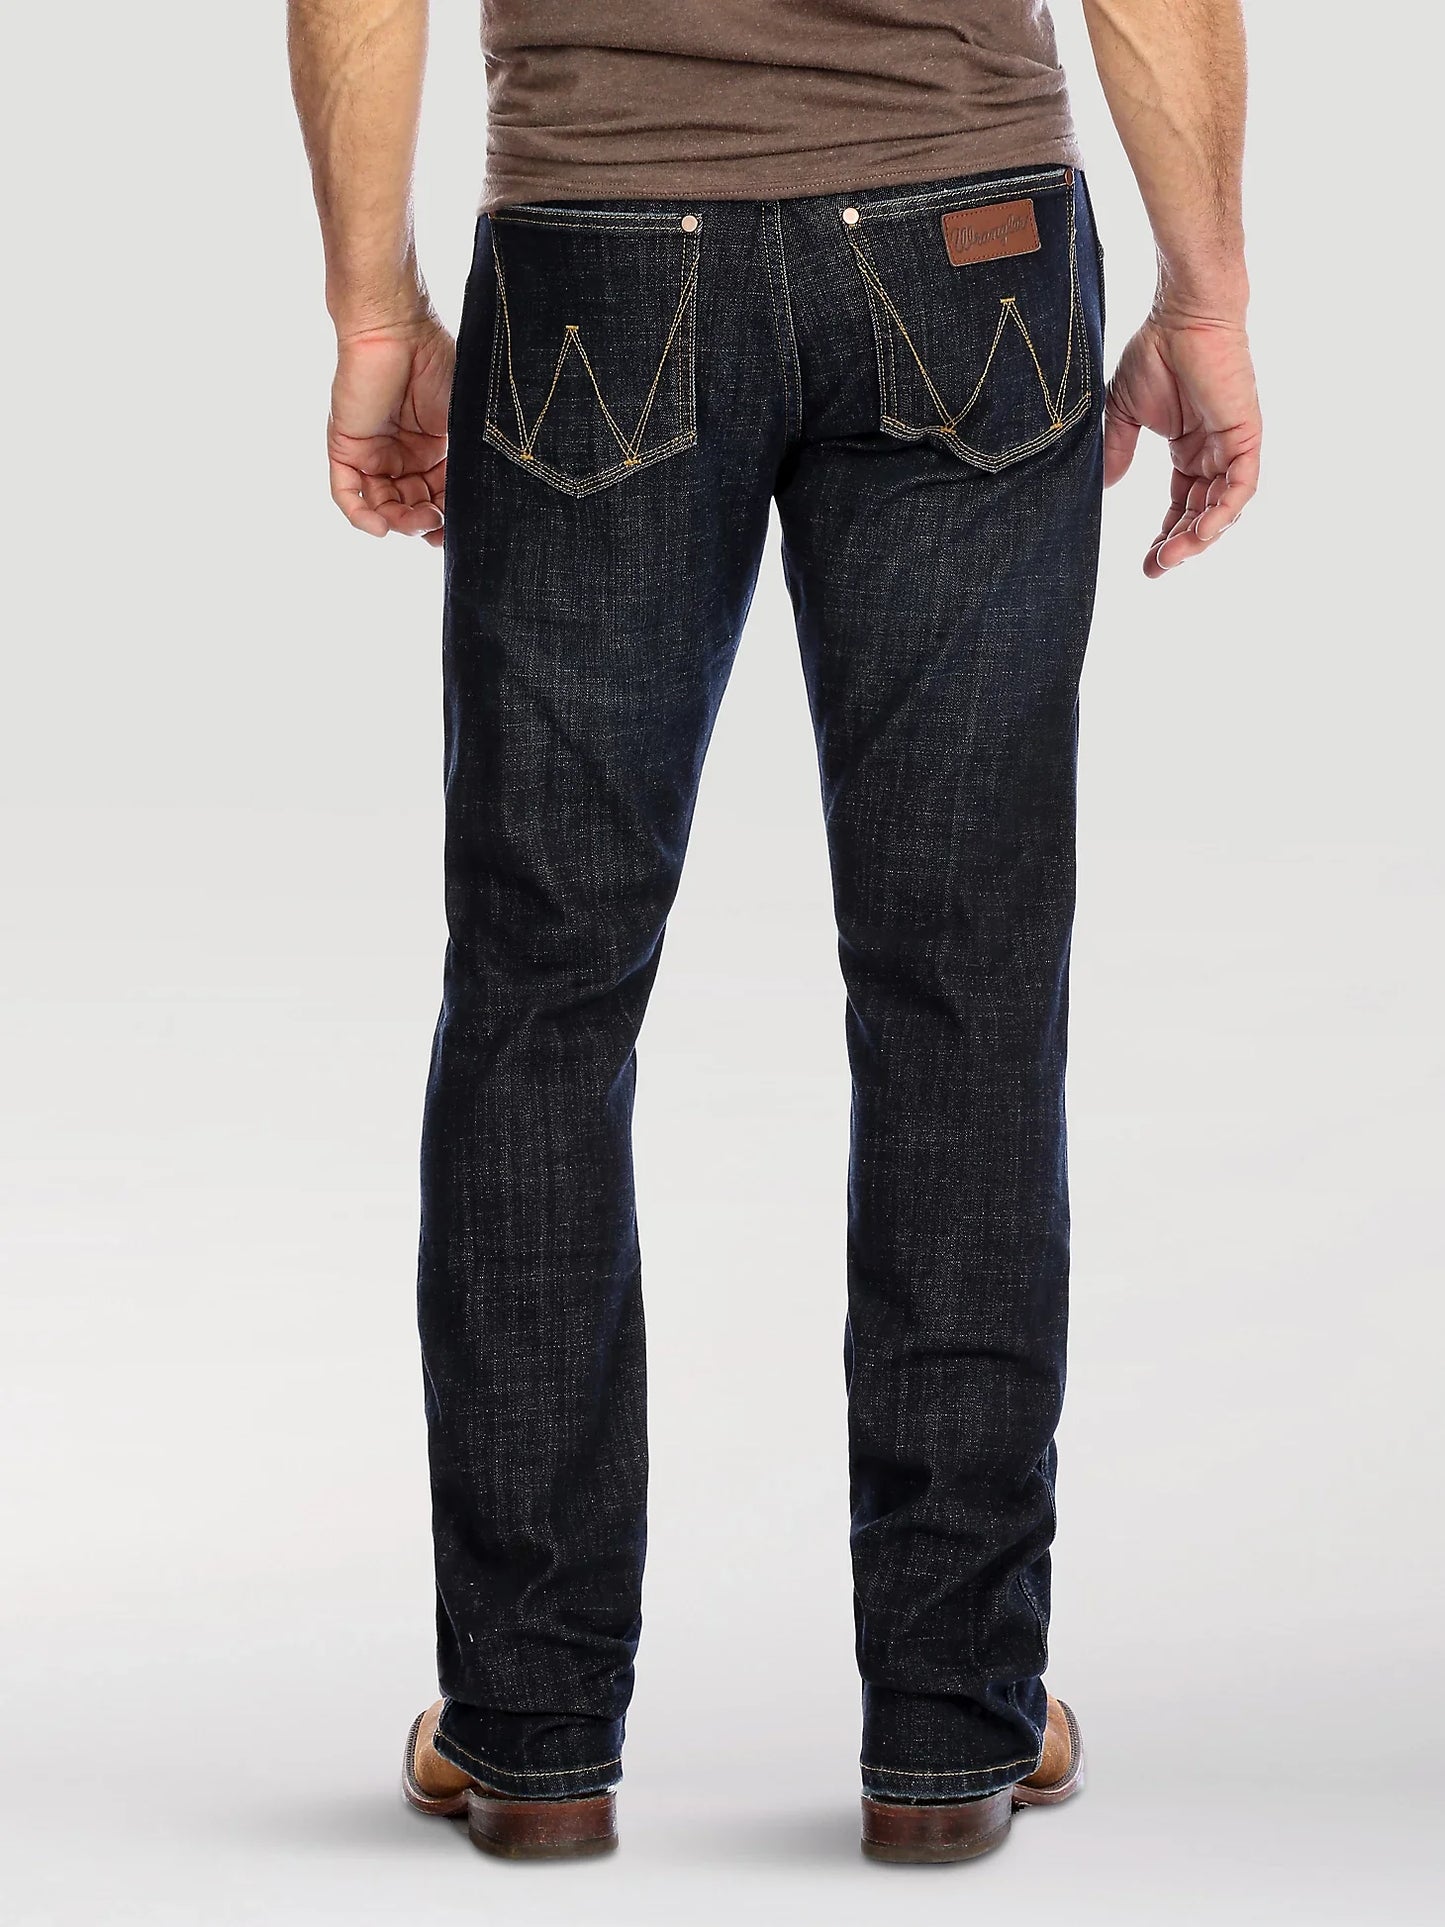 Wrangler USA Mens Slim Fit Boot Cut Jean in Dax - 77MWZDX34